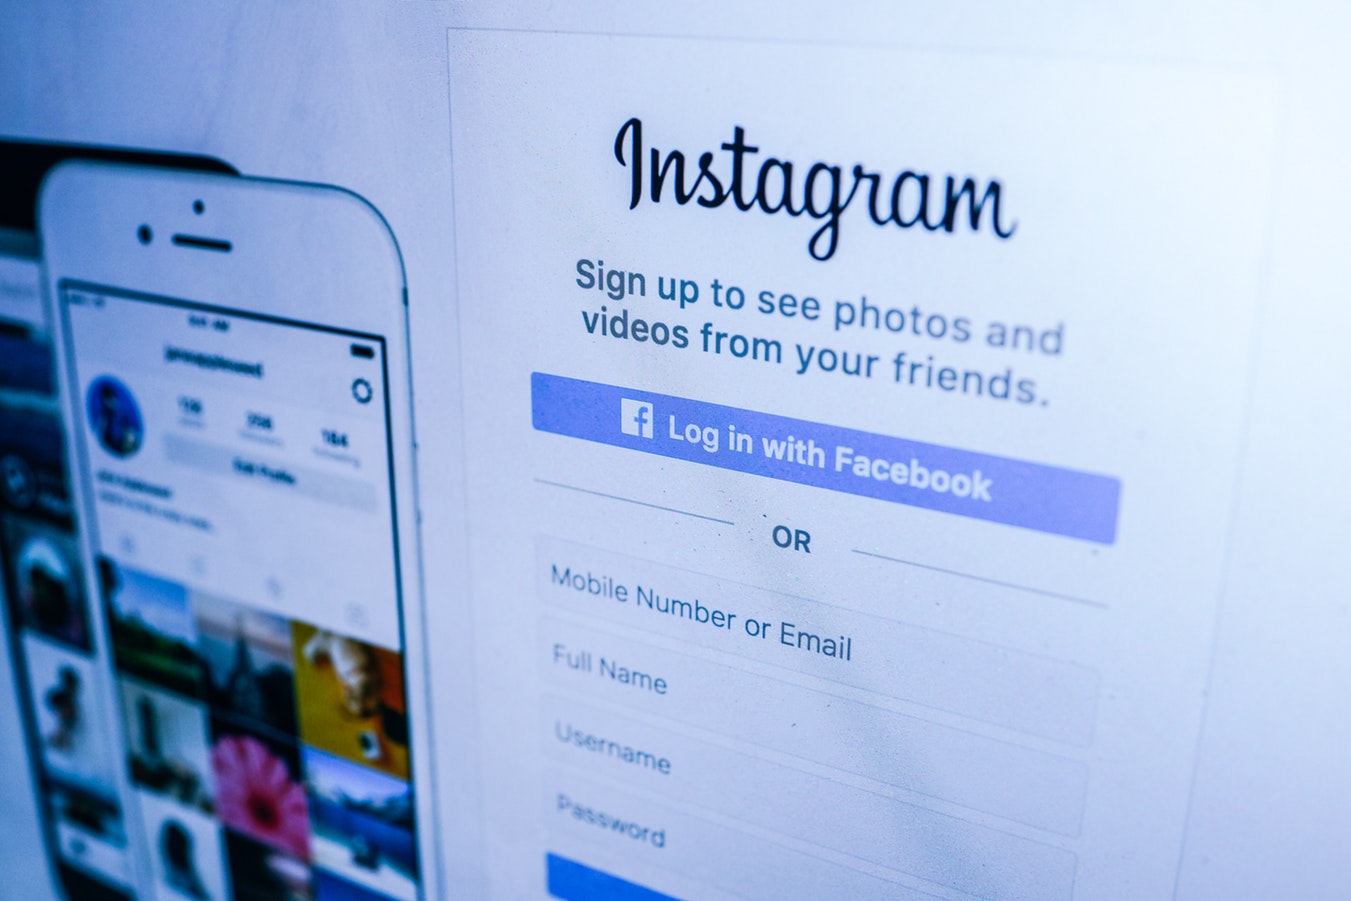 Six ways to build an effective Instagram presence